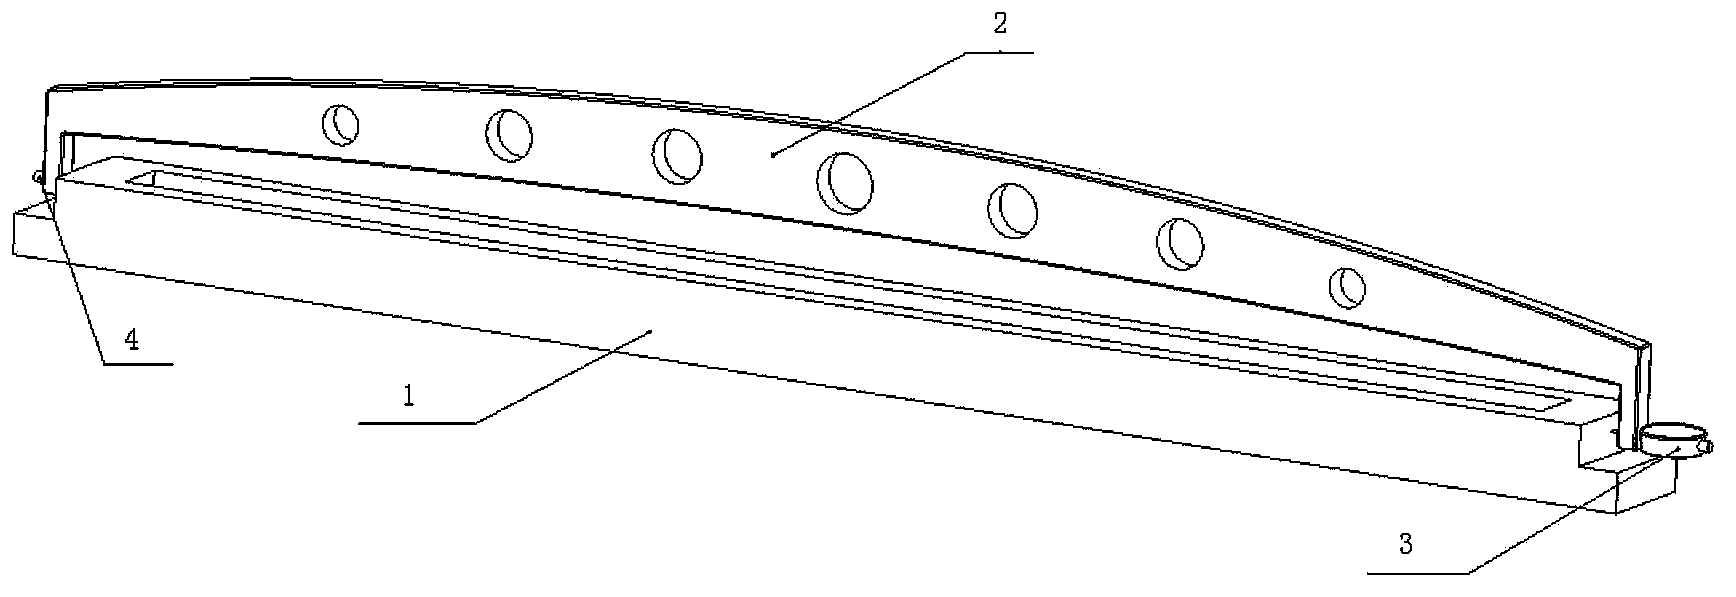 Large-diameter strip ring gauge and method for calibrating same